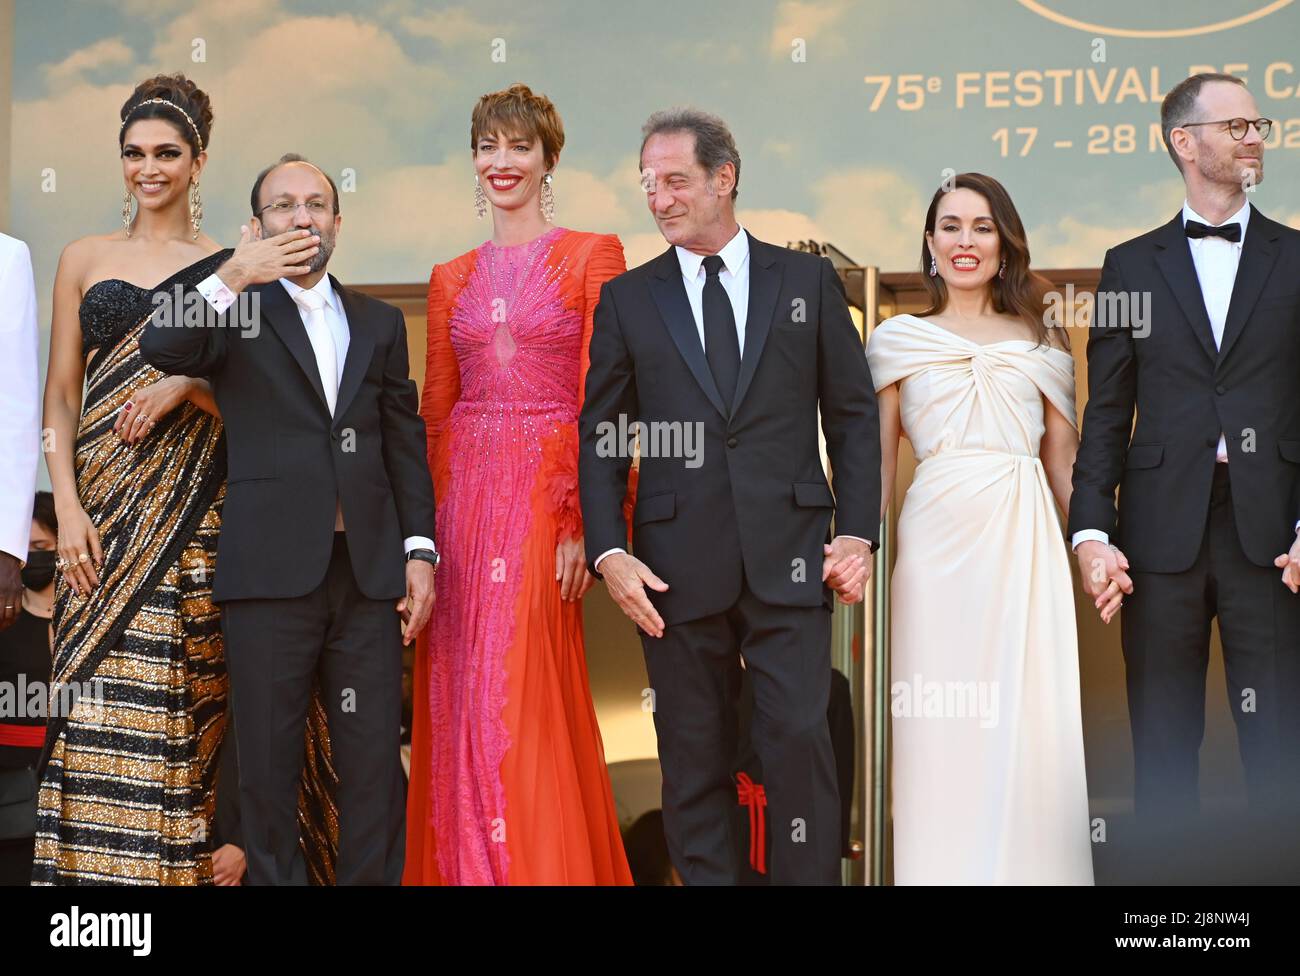 Deepika Padukone attends Cannes 2022 'Elvis' premiere in Louis